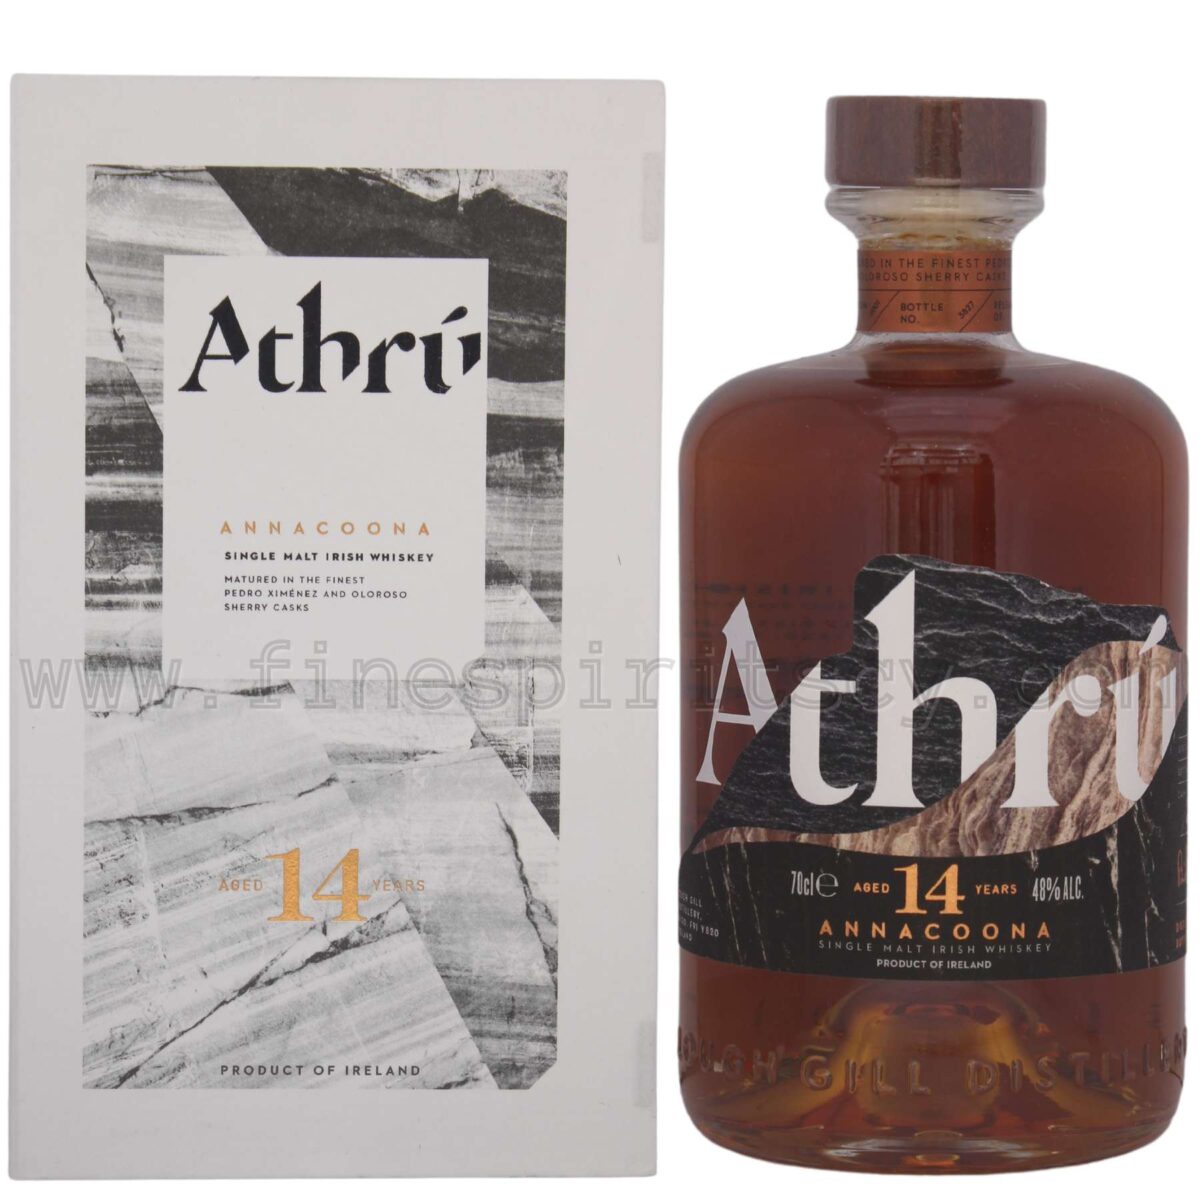 Athru Annacoona 14 Year Old Irish Whisky CY Single Malt Front Bottle Box